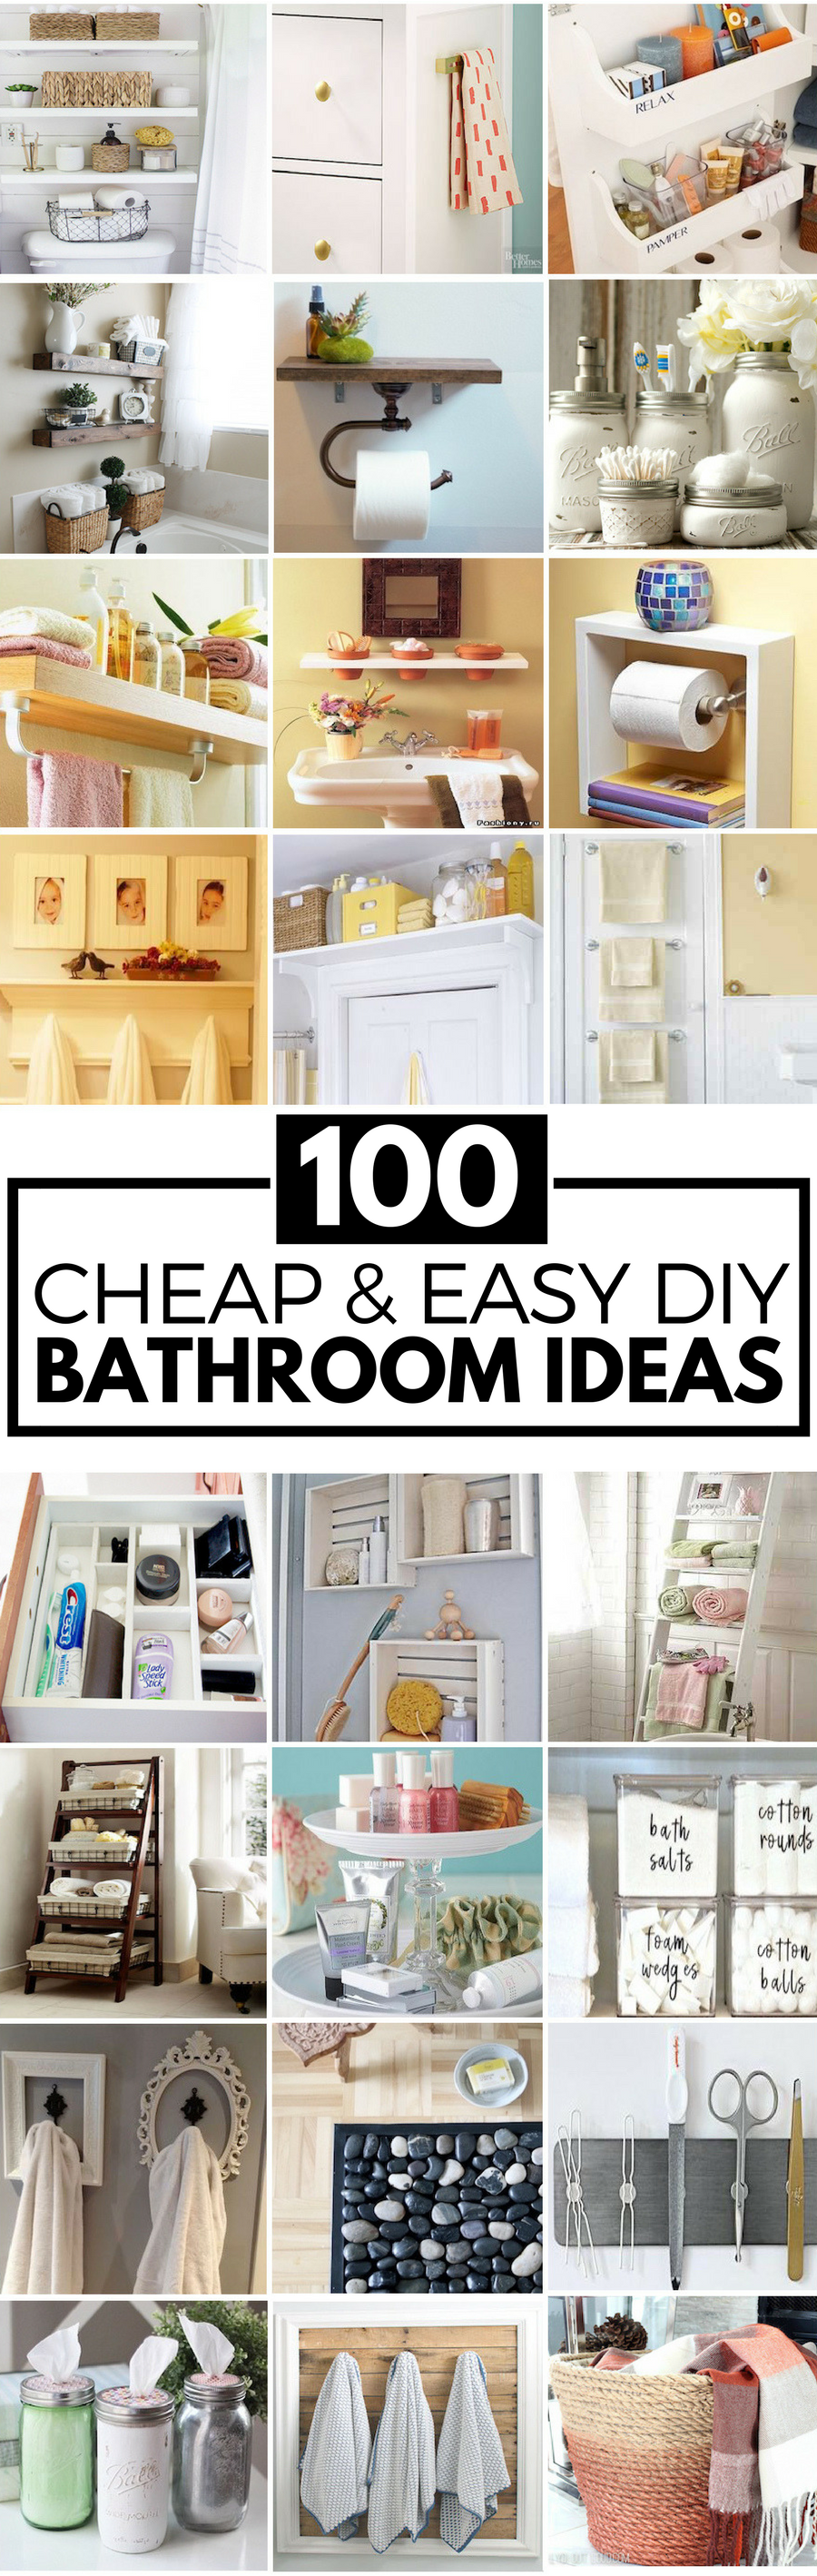 100 Cheap and Easy DIY Bathroom Ideas - Prudent Penny Pincher